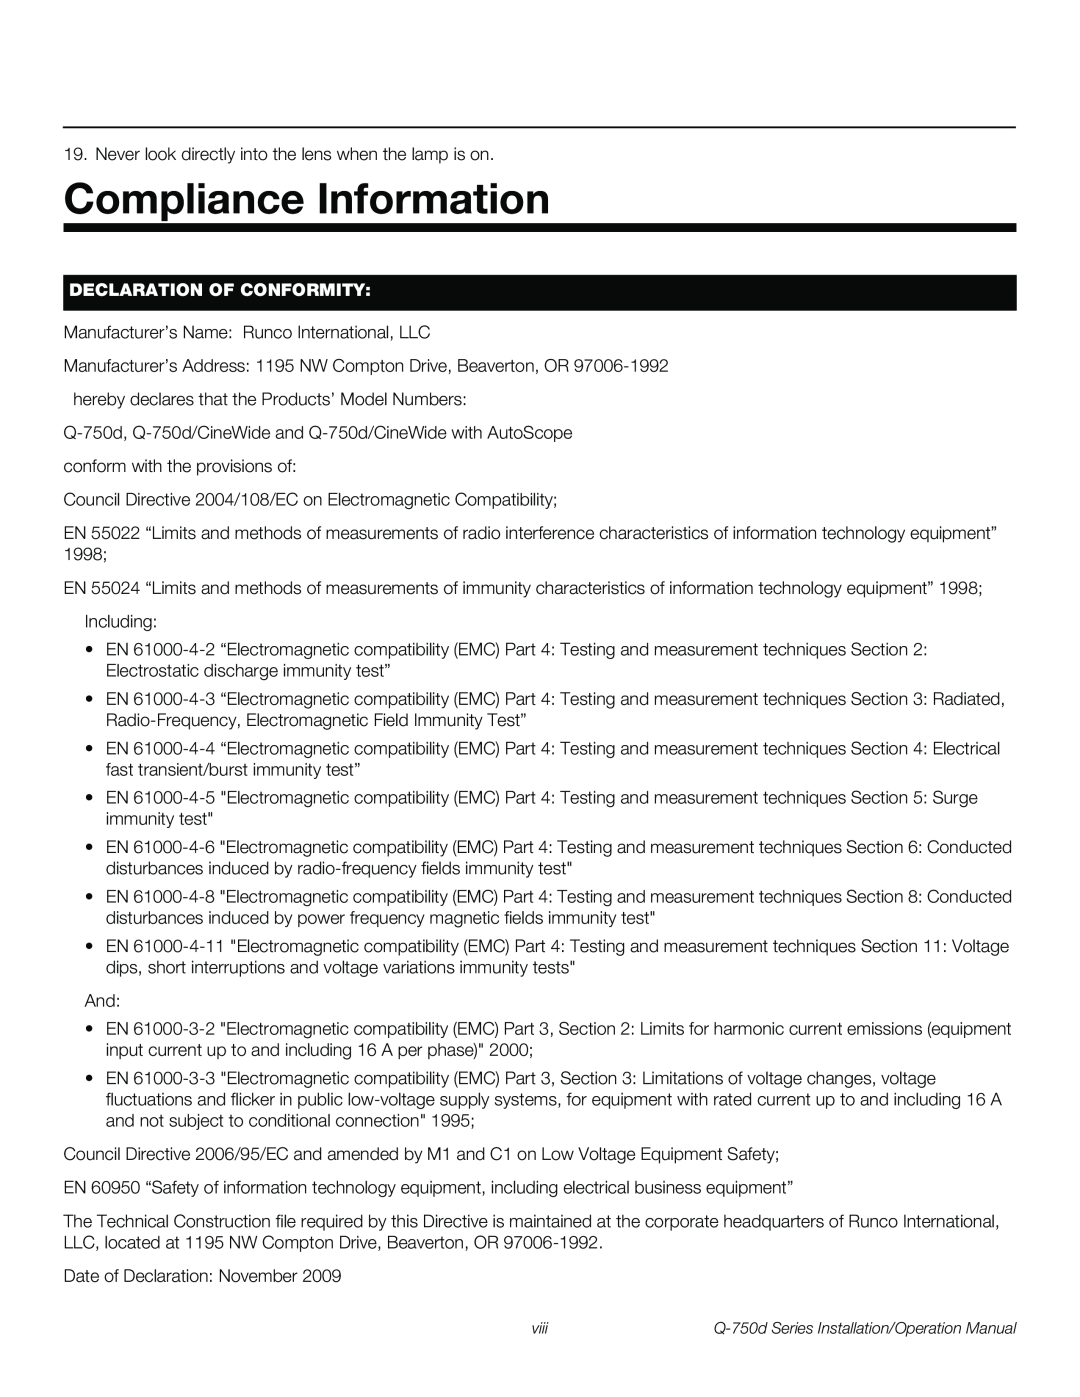 Runco Q-750D operation manual Compliance Information, Declaration Of Conformity 